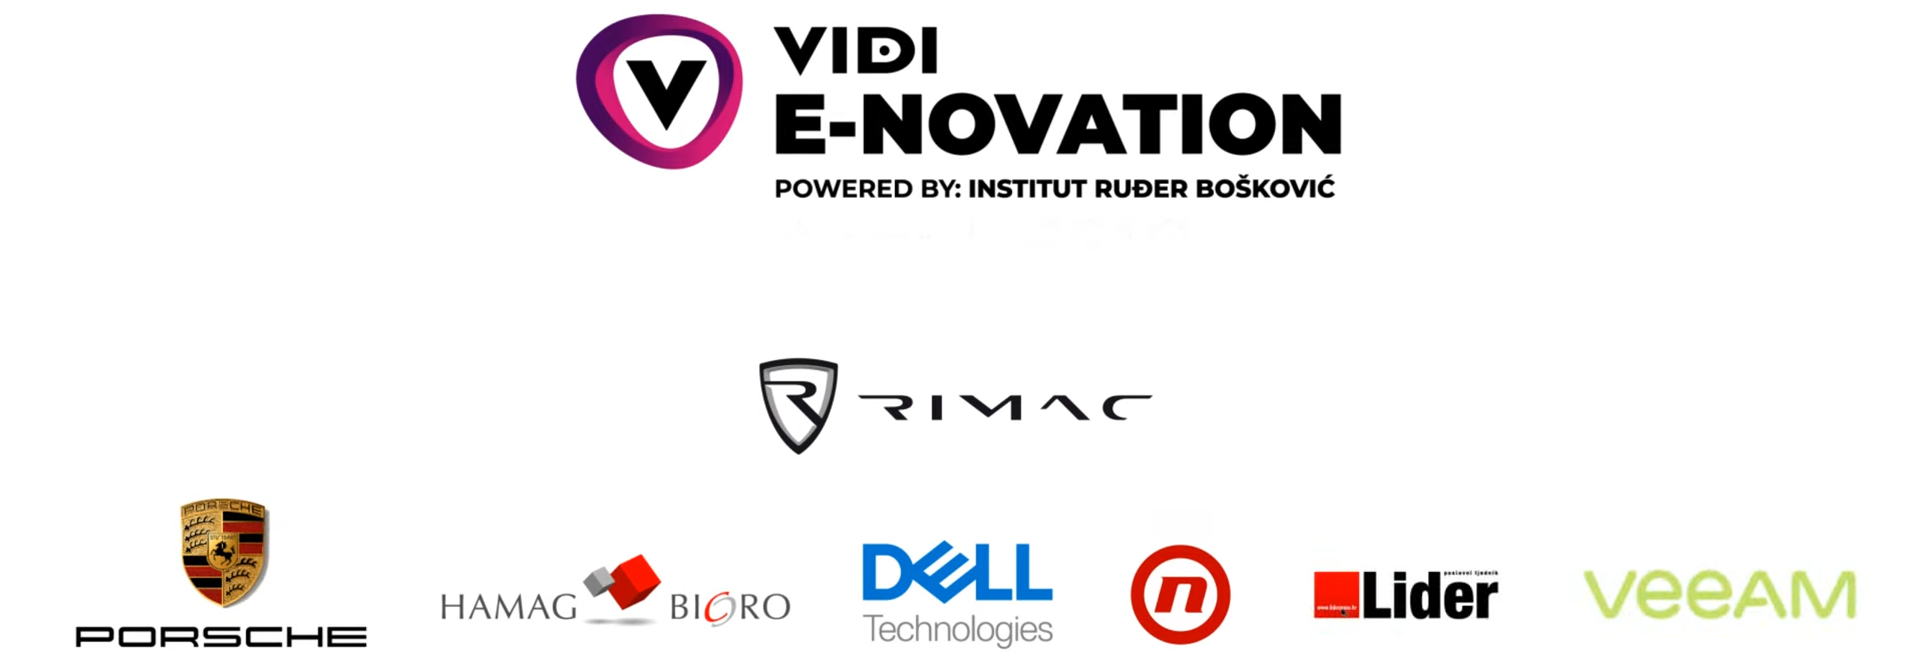 Pixblasters Wins VIDI e-novation Innovation Award